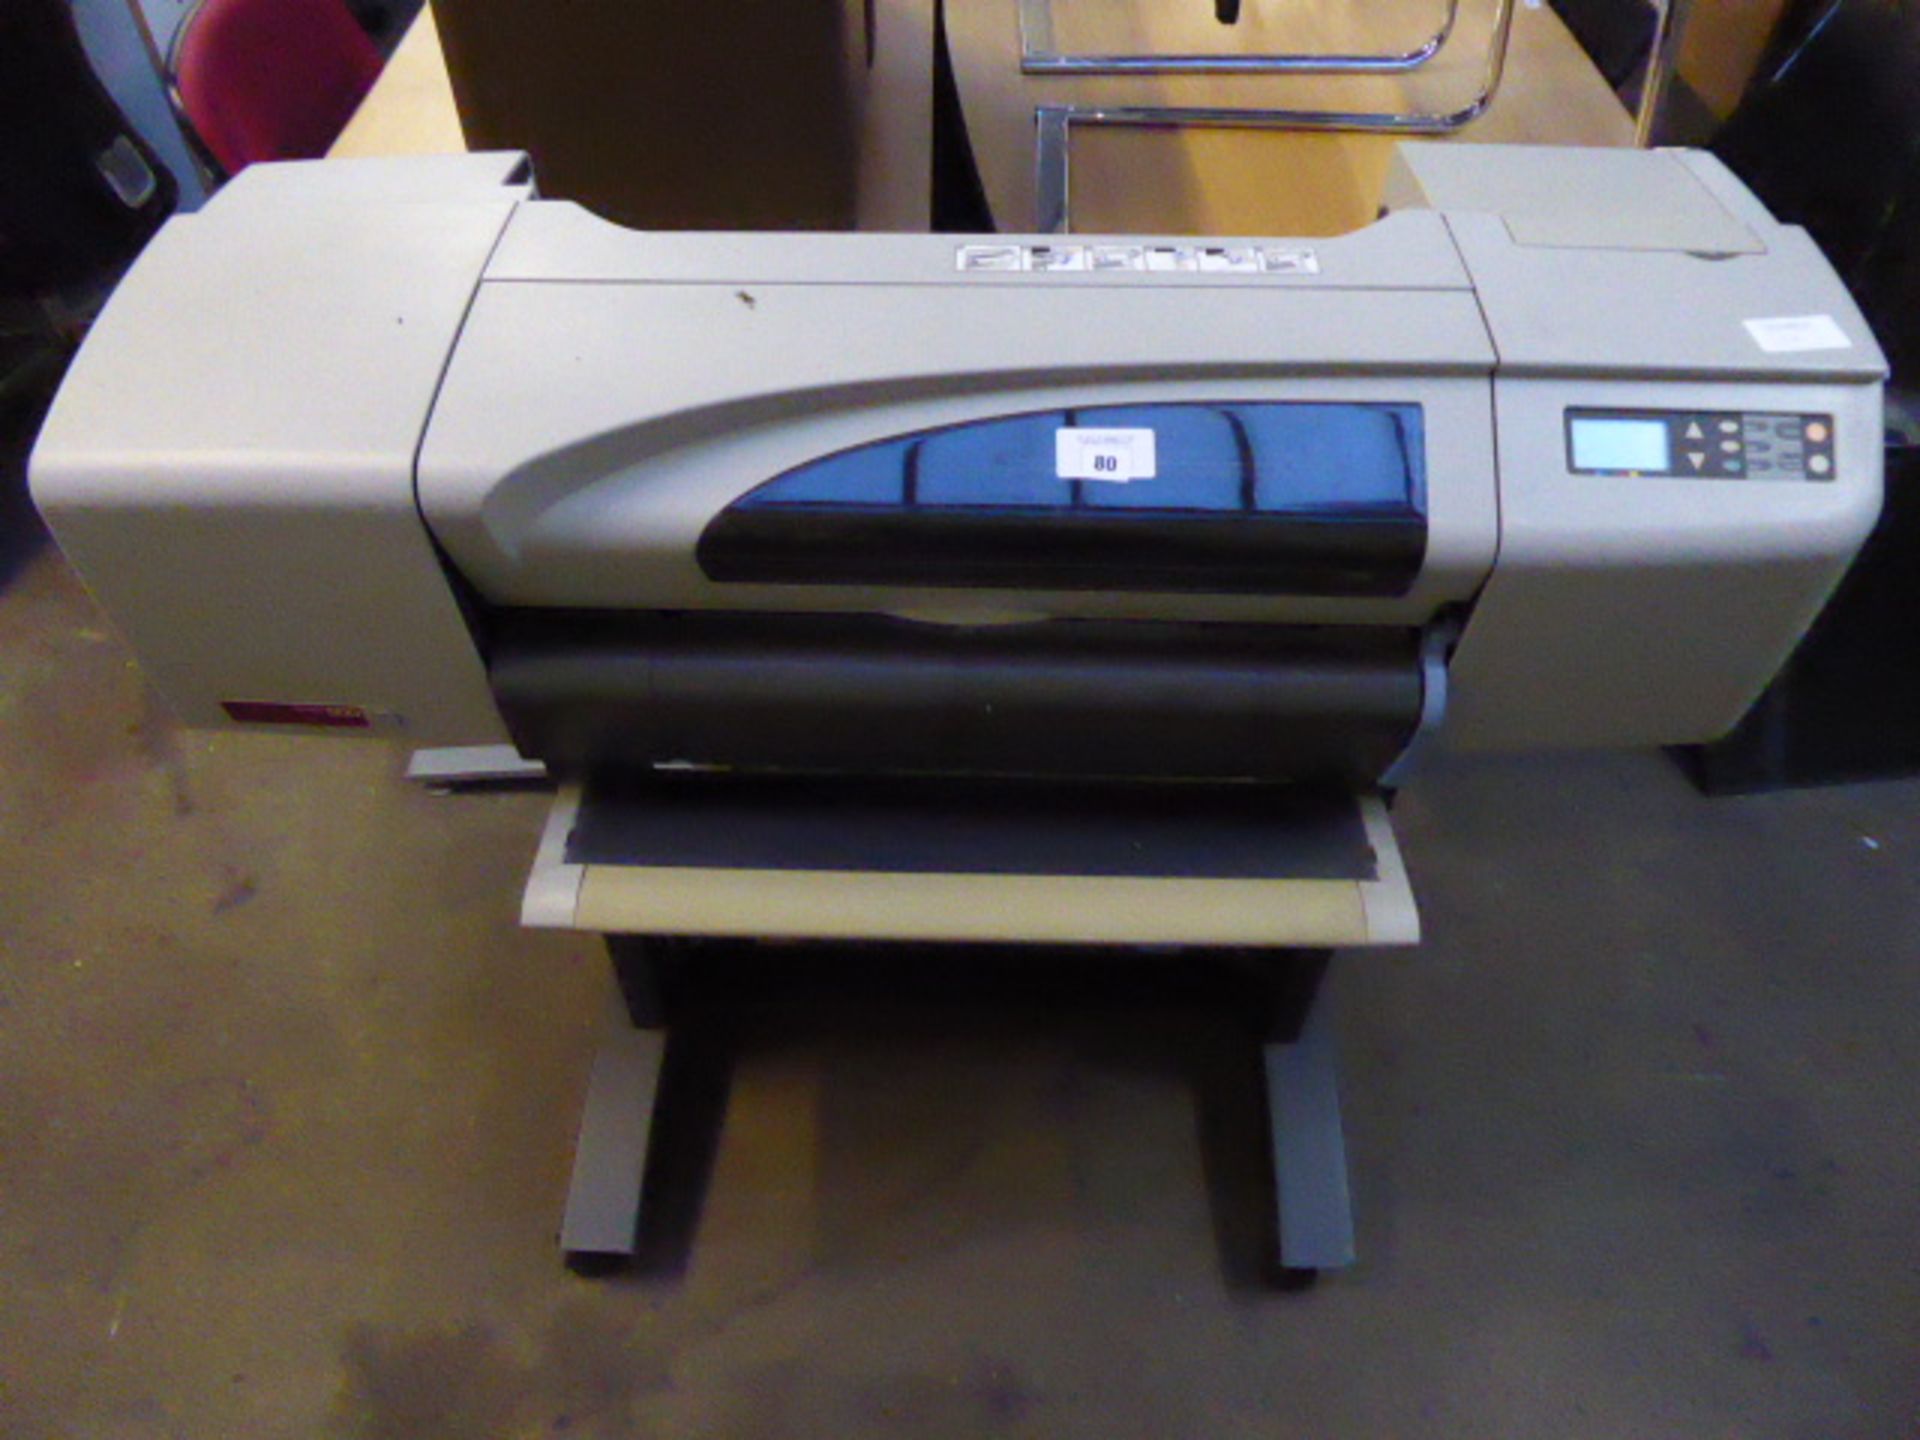 Hewlett Packard Design Jet 500 wide format printer on mobile stand - Image 3 of 3